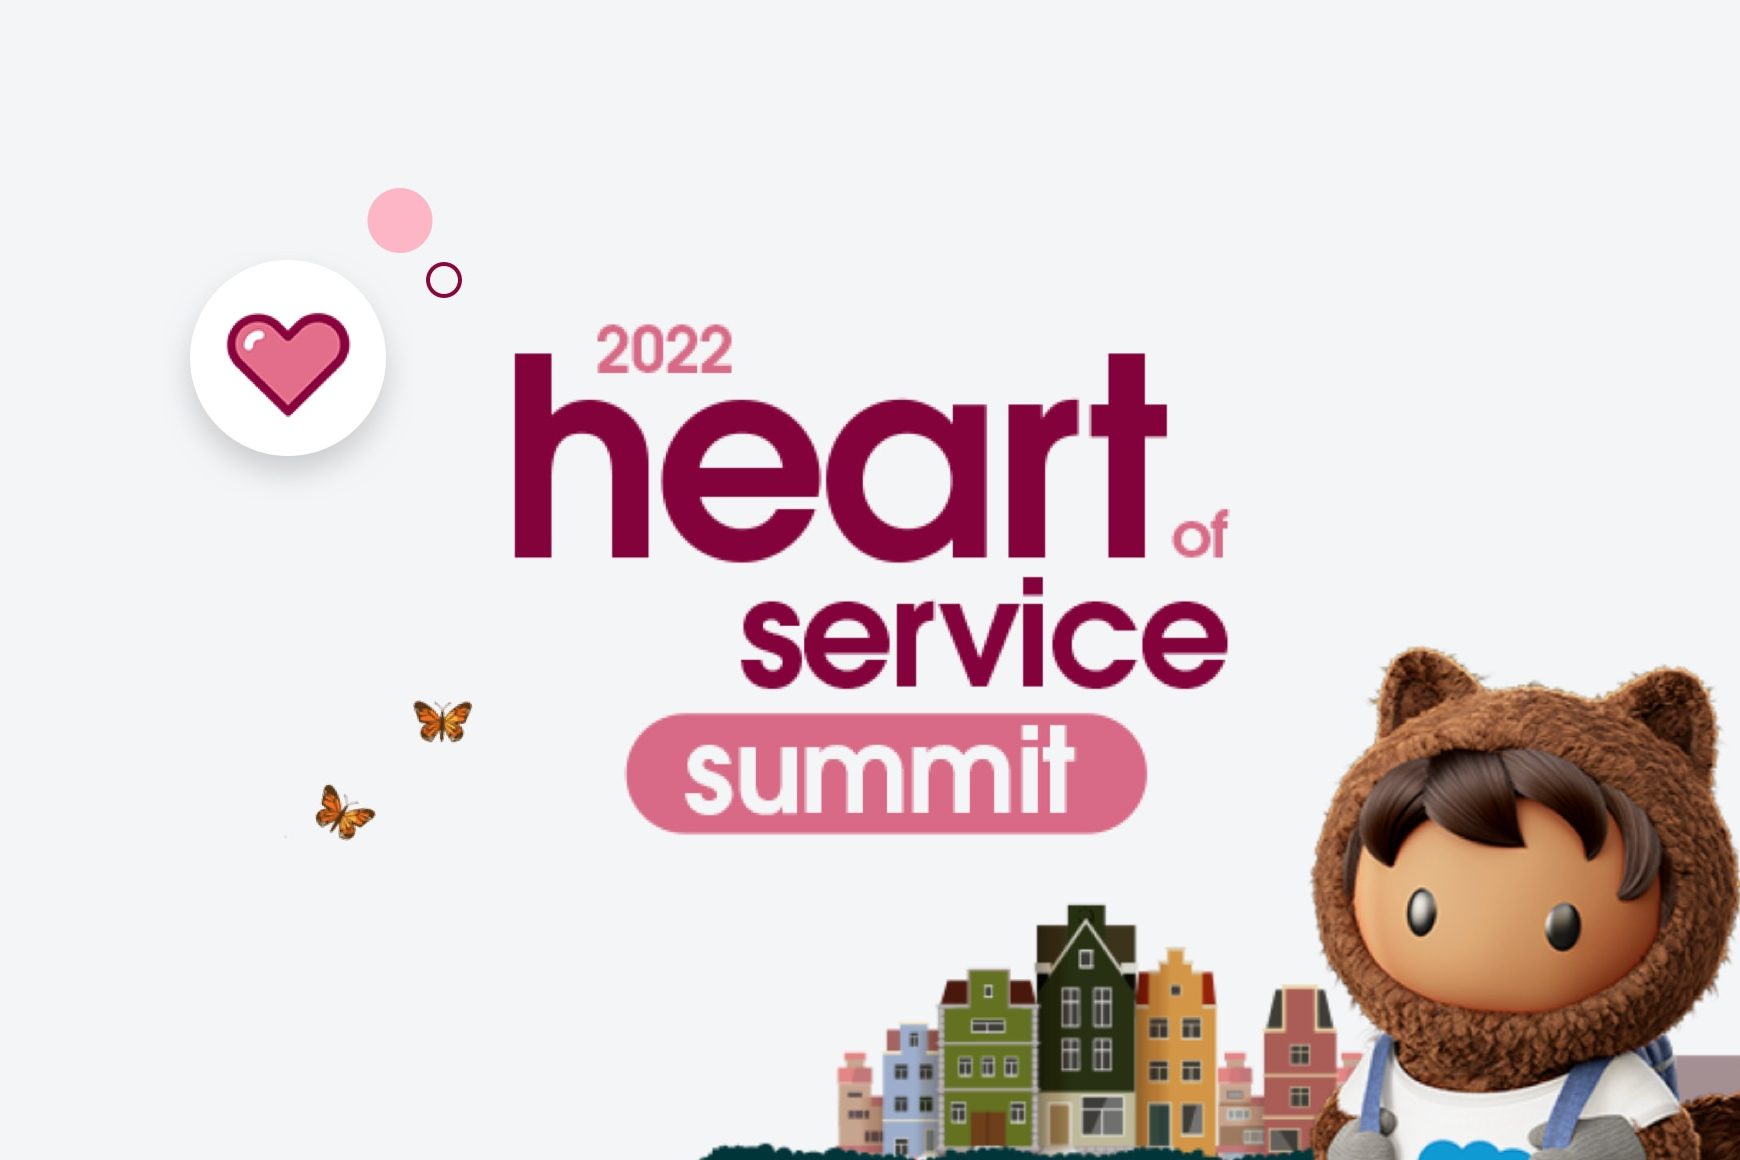 Salesforce: The Heart of Service Summit 2022